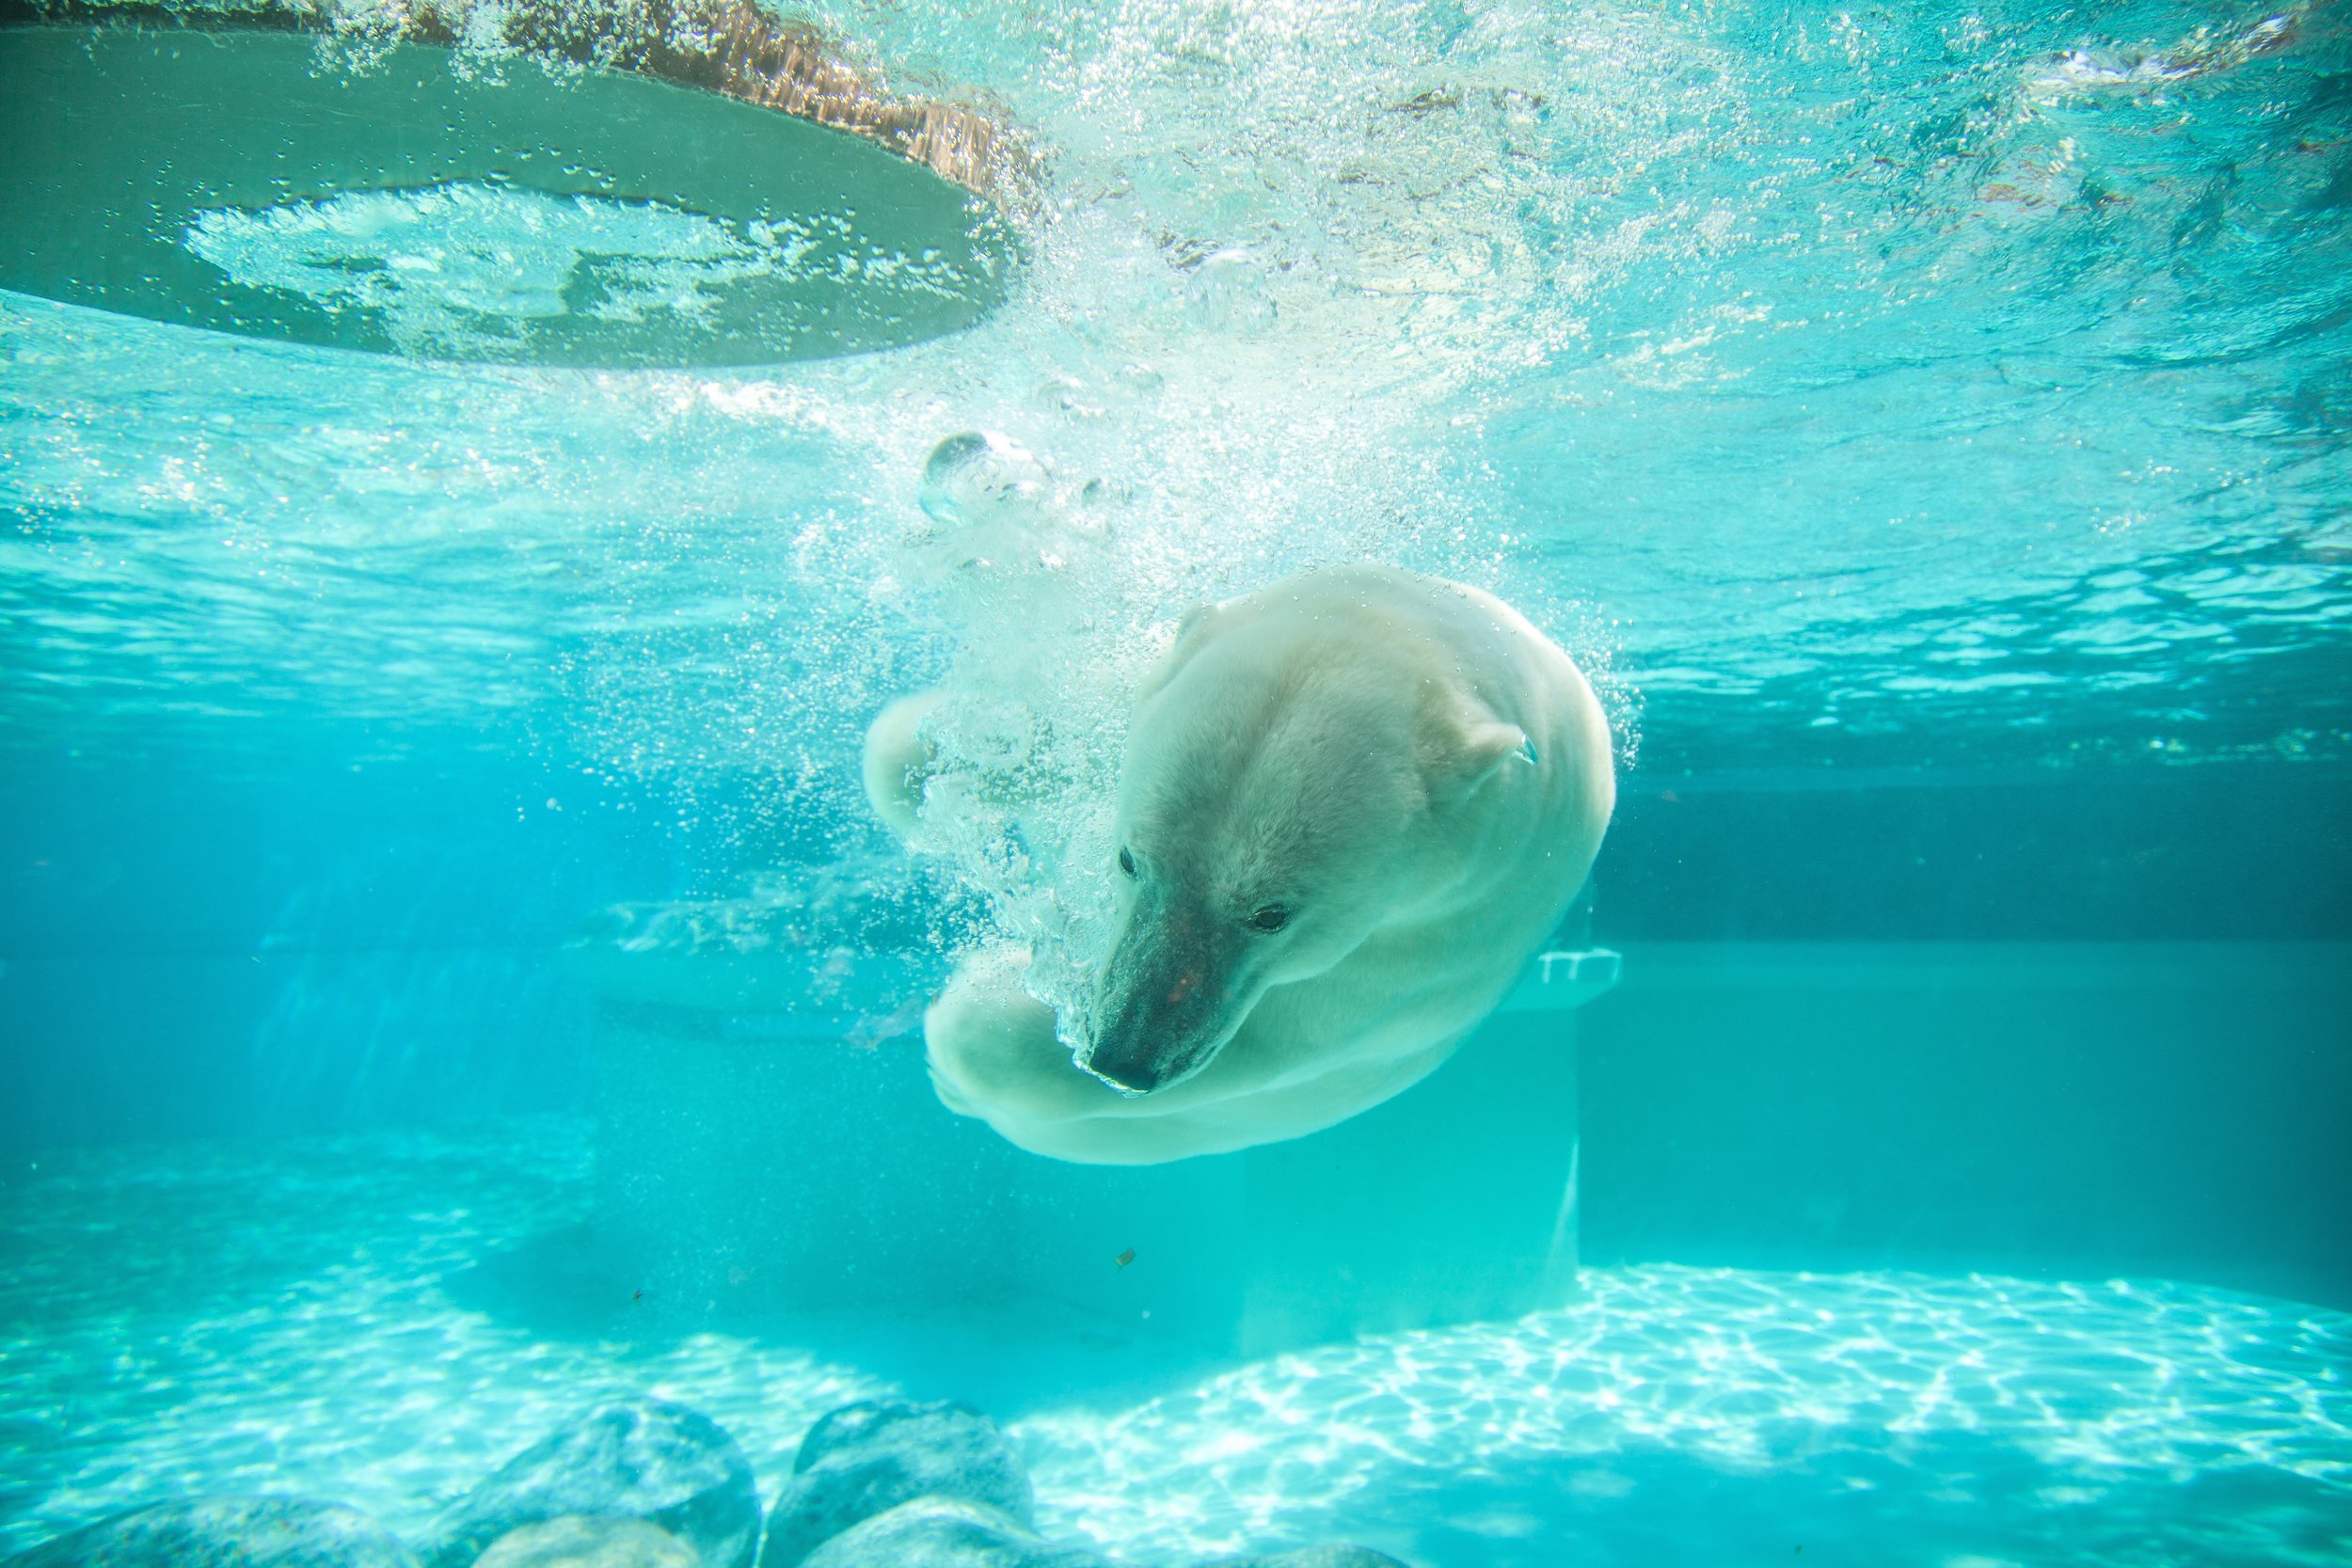 matthew mazzei lincolin park zoo chicago Up cW Polar Bear Swim.jpg